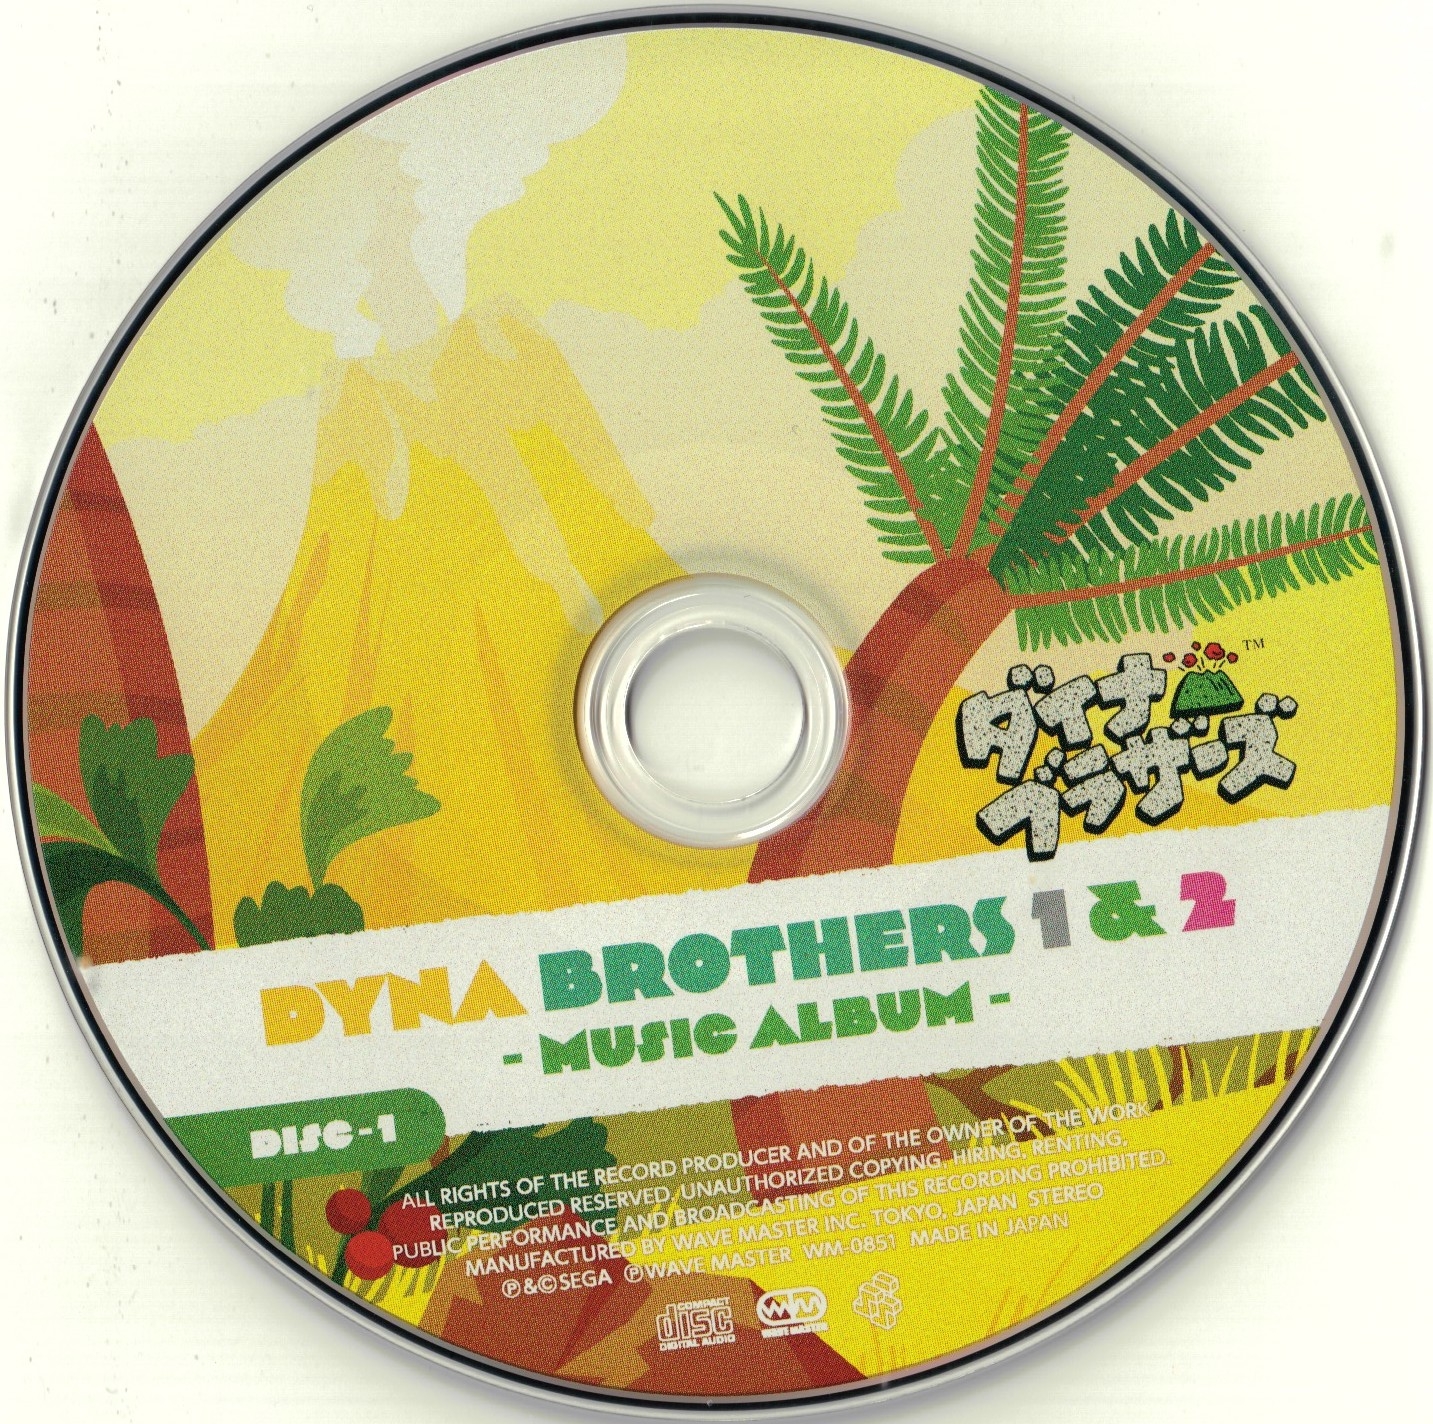 DYNA BROTHERS 1 u0026 2 - Music Album - (2022) MP3 - Download DYNA BROTHERS 1 u0026  2 - Music Album - (2022) Soundtracks for FREE!